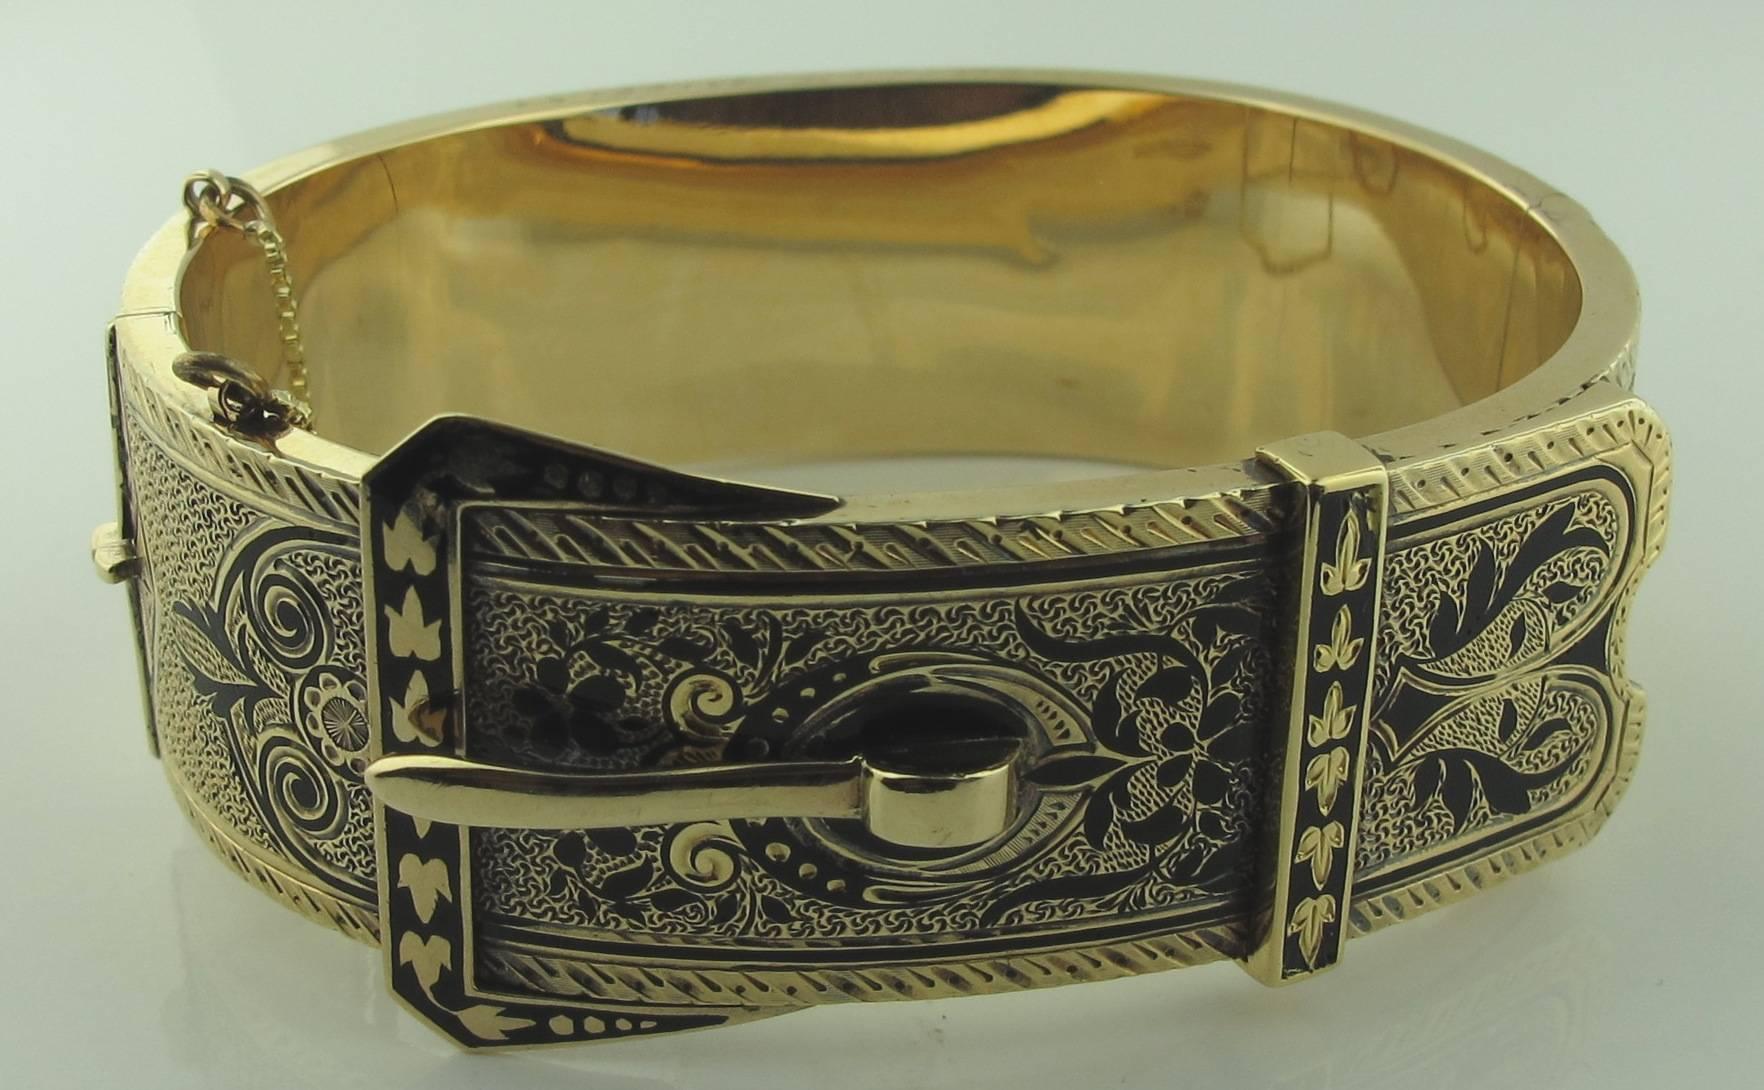 Cuff Bracelet in belt buckle design set in 14 carat yellow gold, weighing 41 grams.